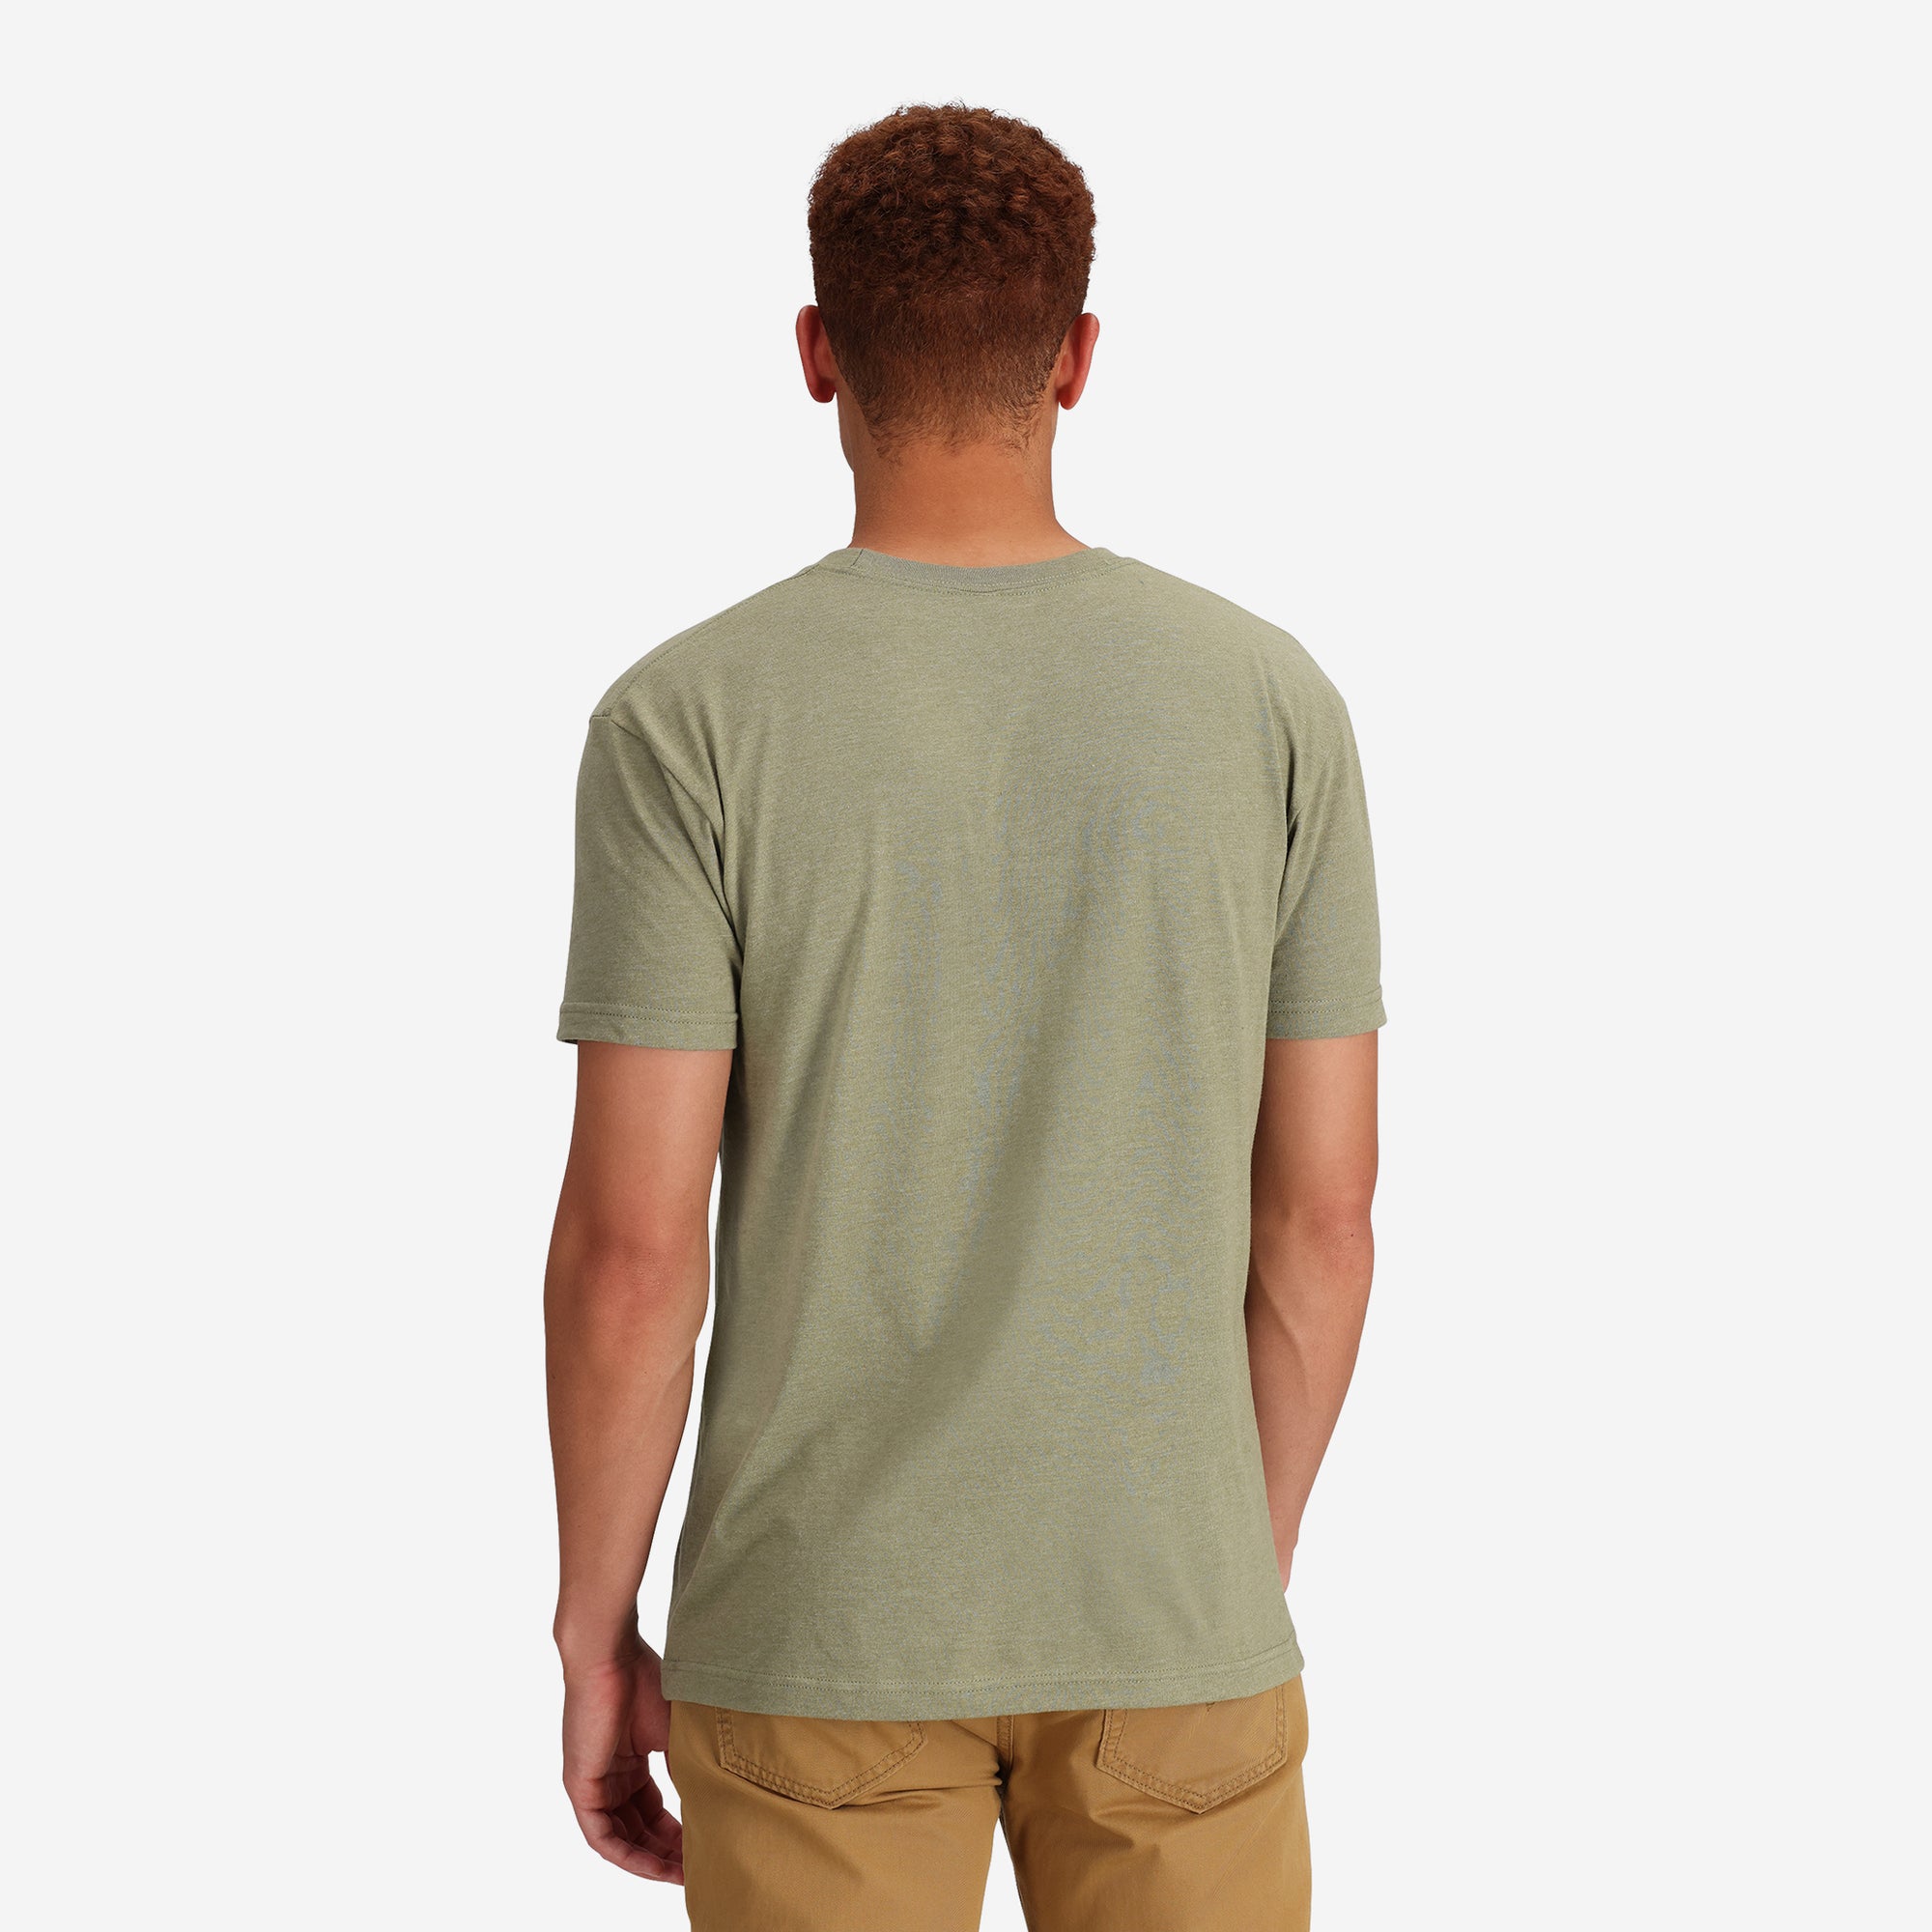 Unisex Squatch Your Mountain T-Shirt